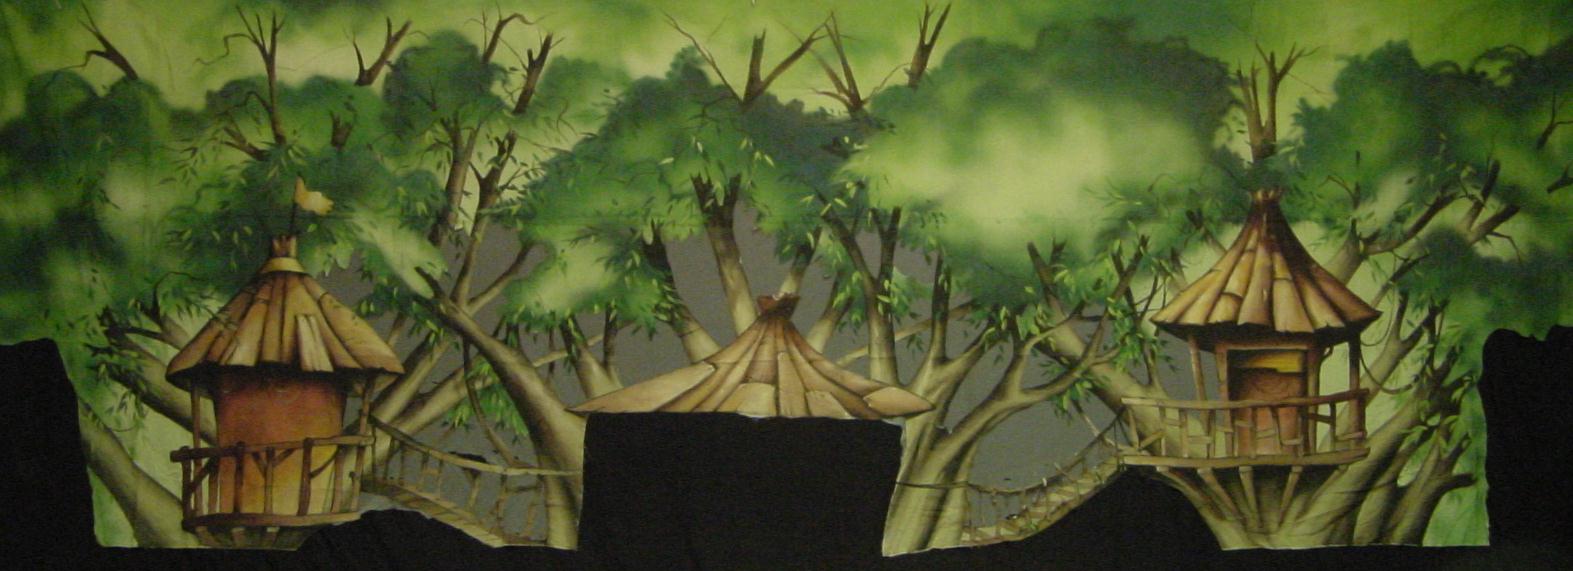 Peter Pan Treetops Border main image